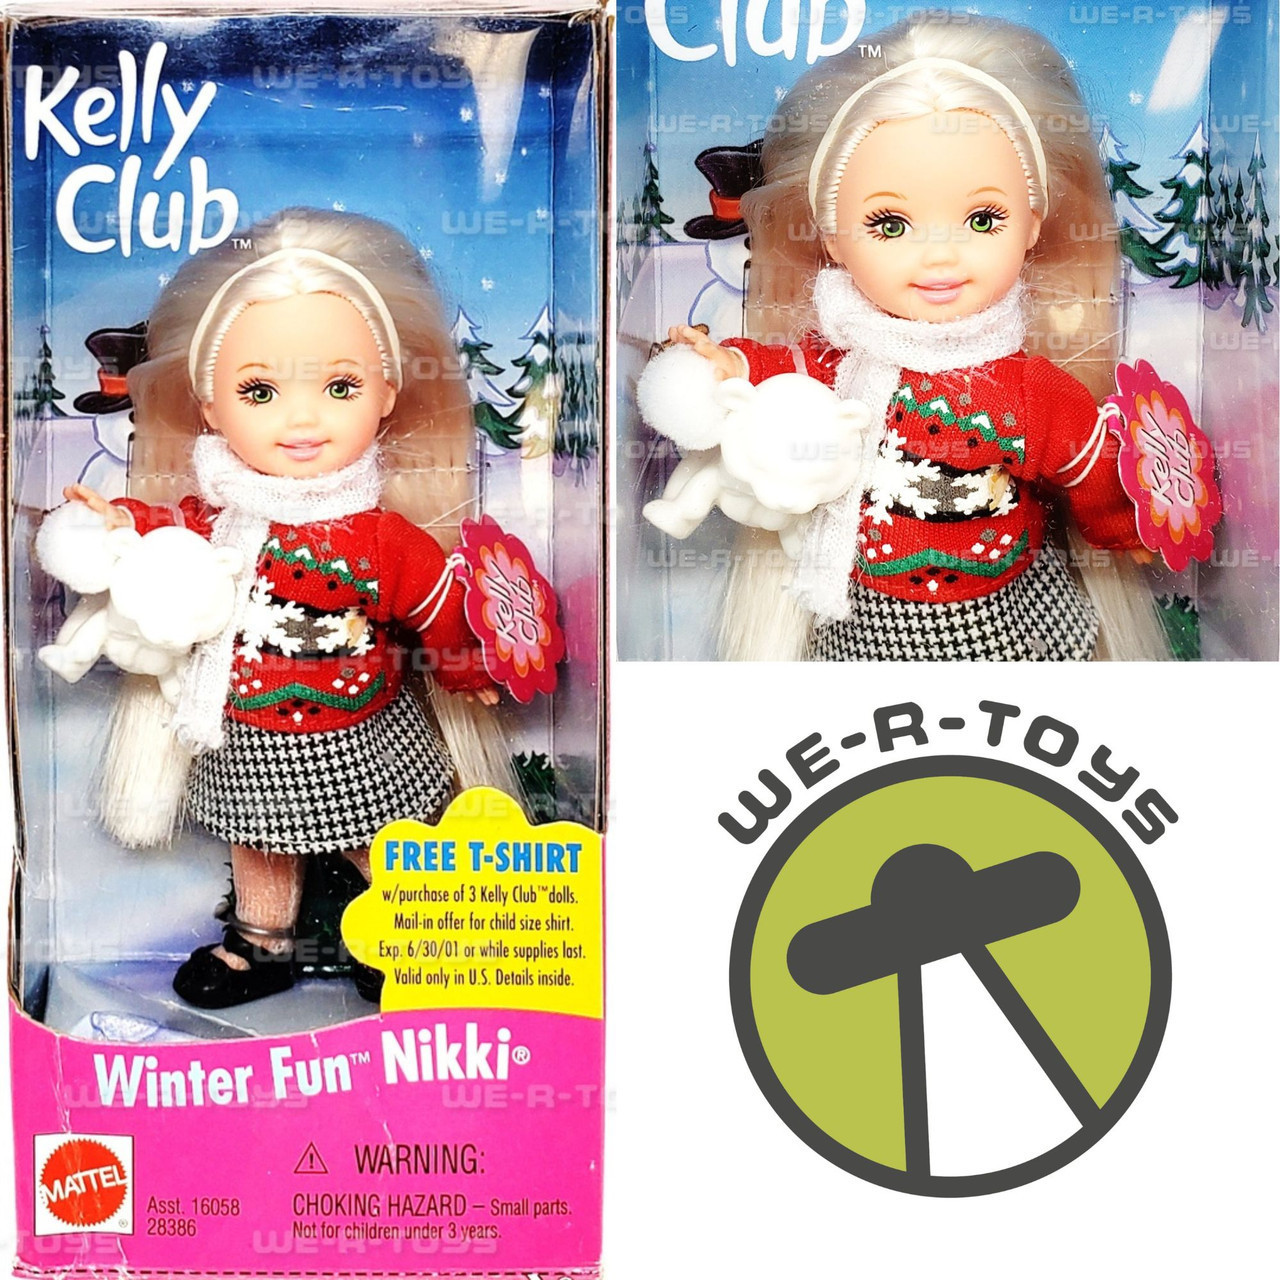 Barbie Kelly Club Winter Fun Nikki Doll 2000 Mattel #28386 NEW - We-R-Toys